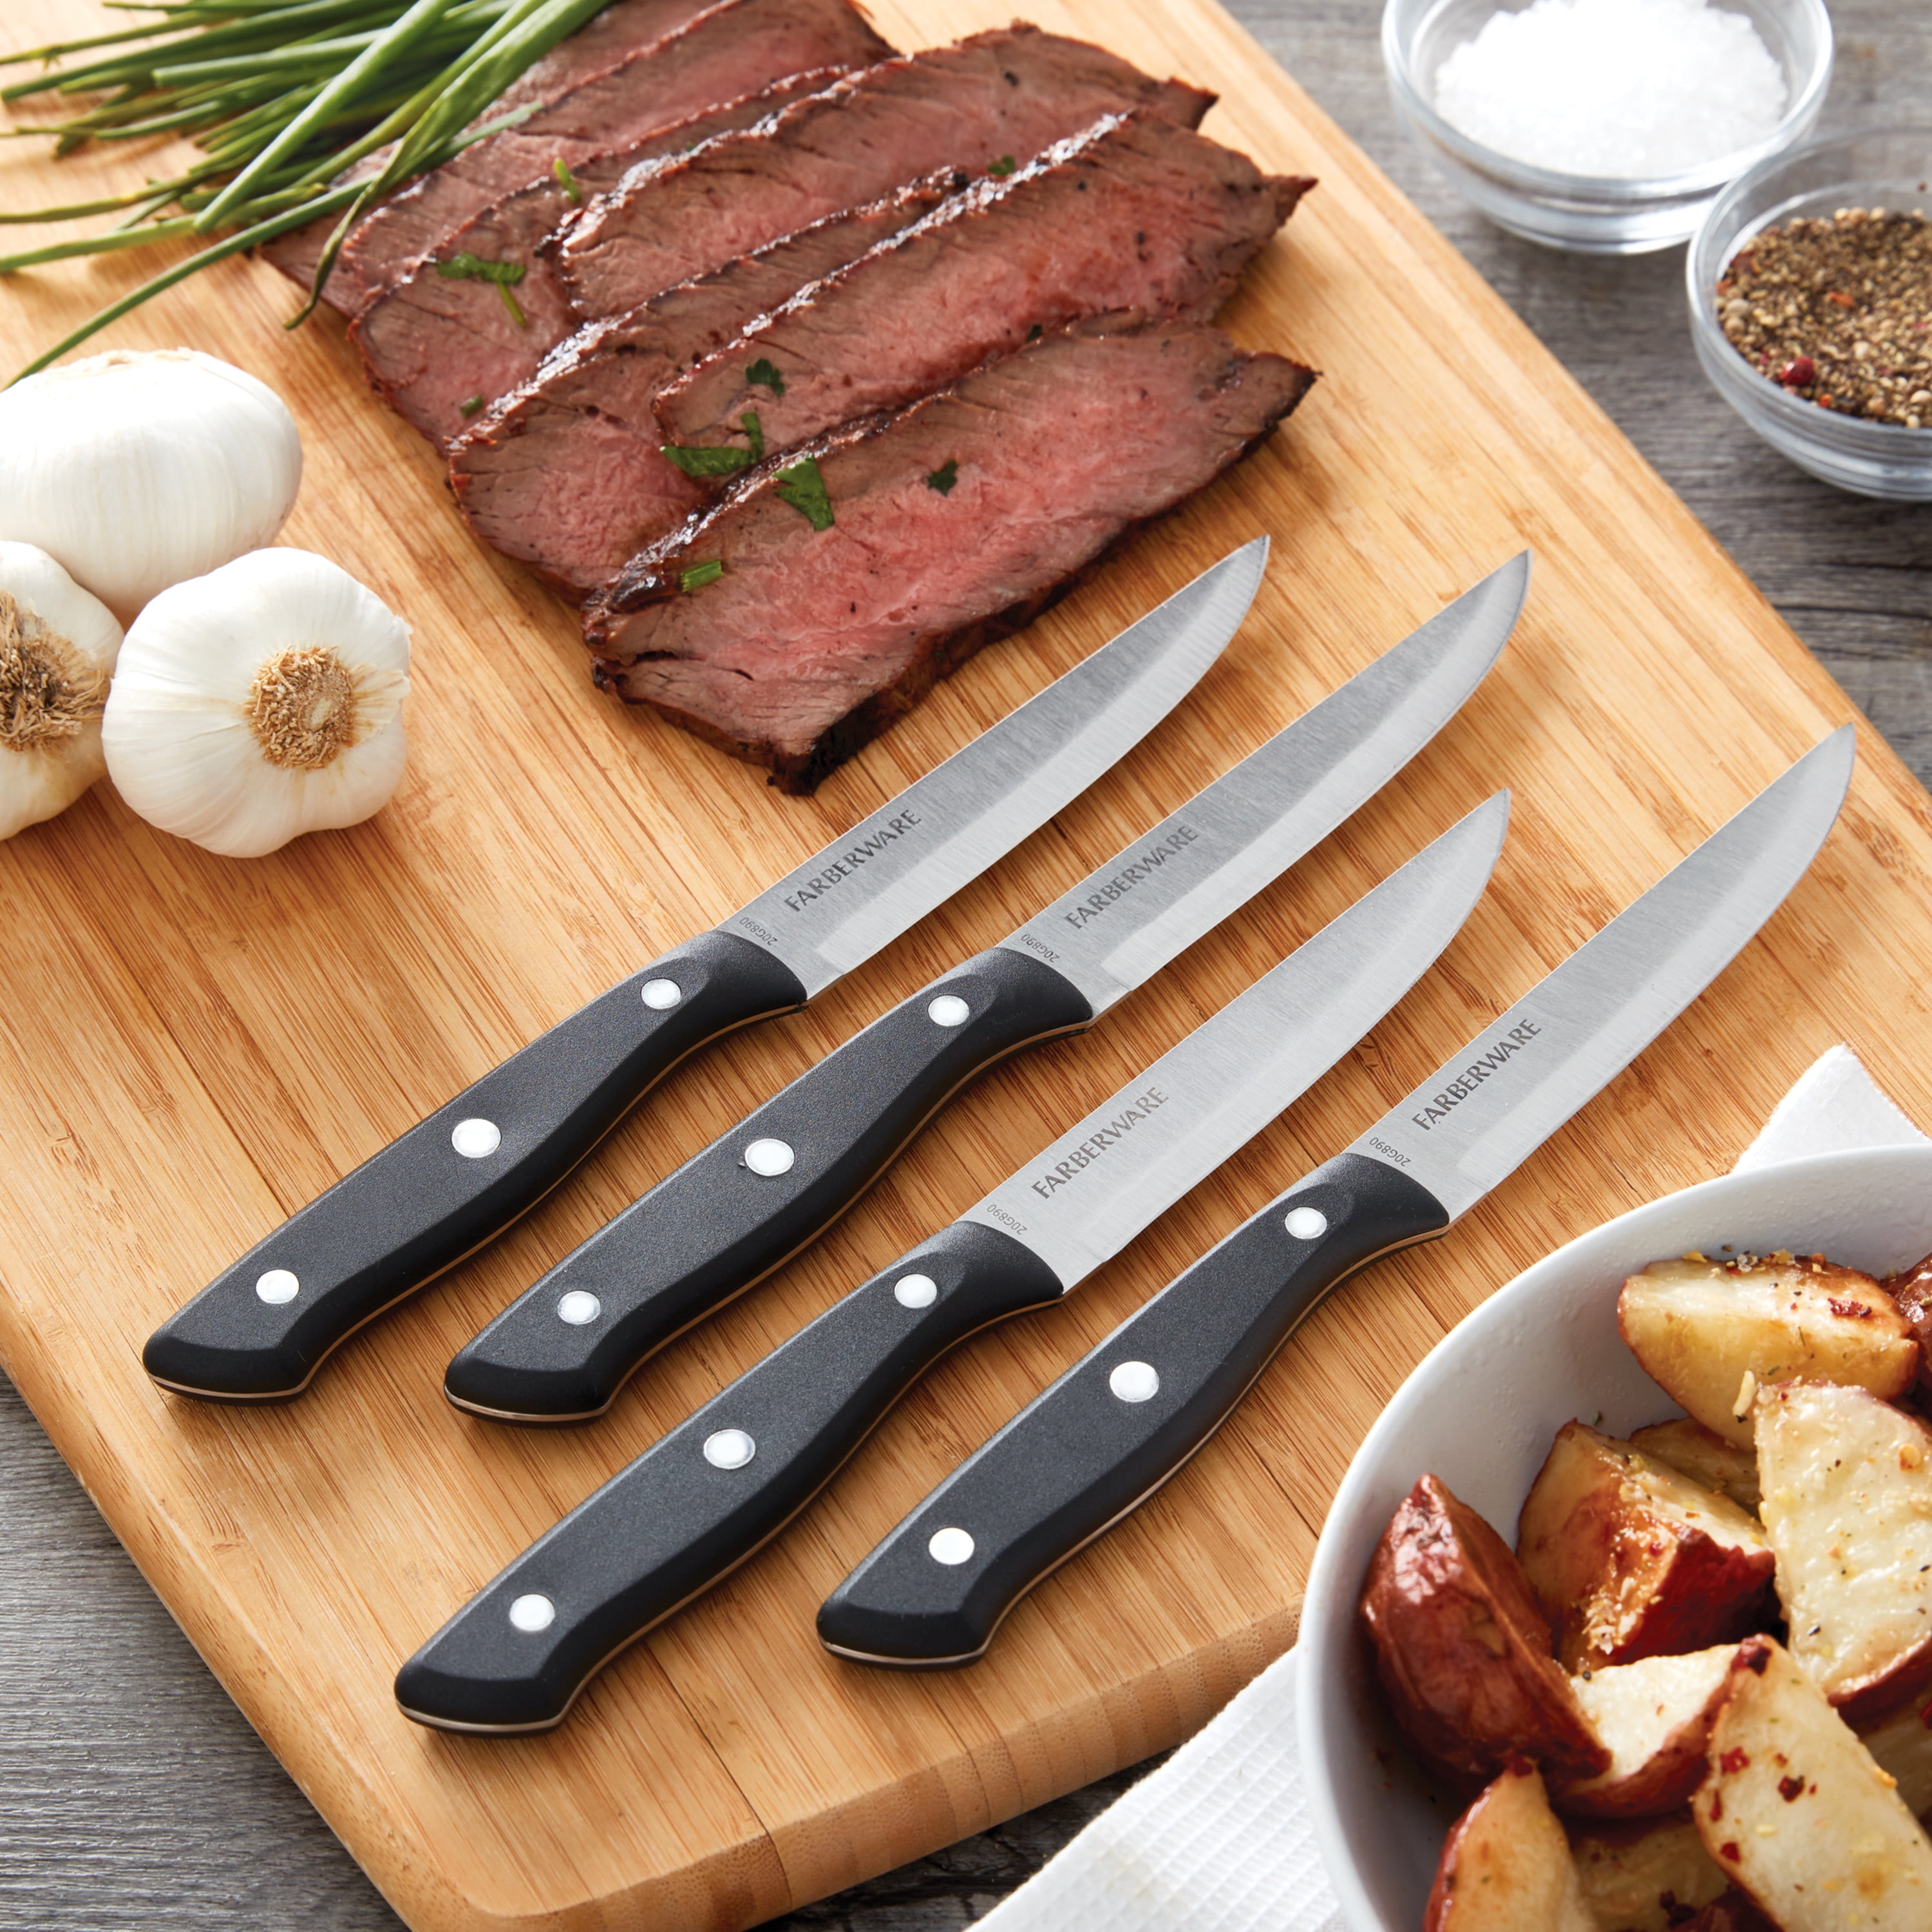 Farberware Never Needs Sharpening 4-piece 4.5-inch Steak Knife Set - Yahoo  Shopping